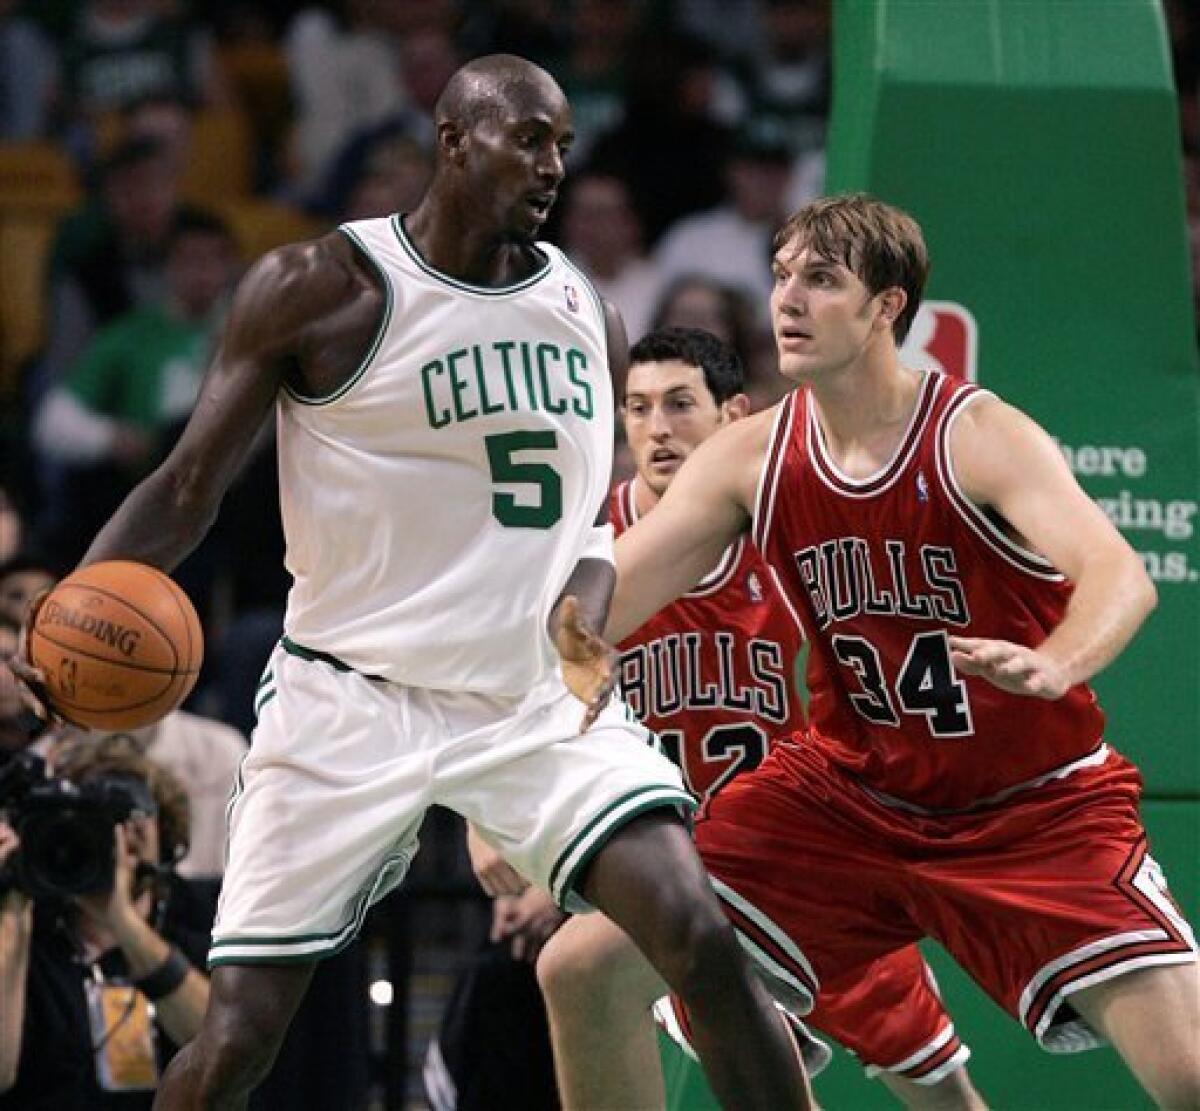 The Making of the Boston Celtics 2008 Championship Banner Video